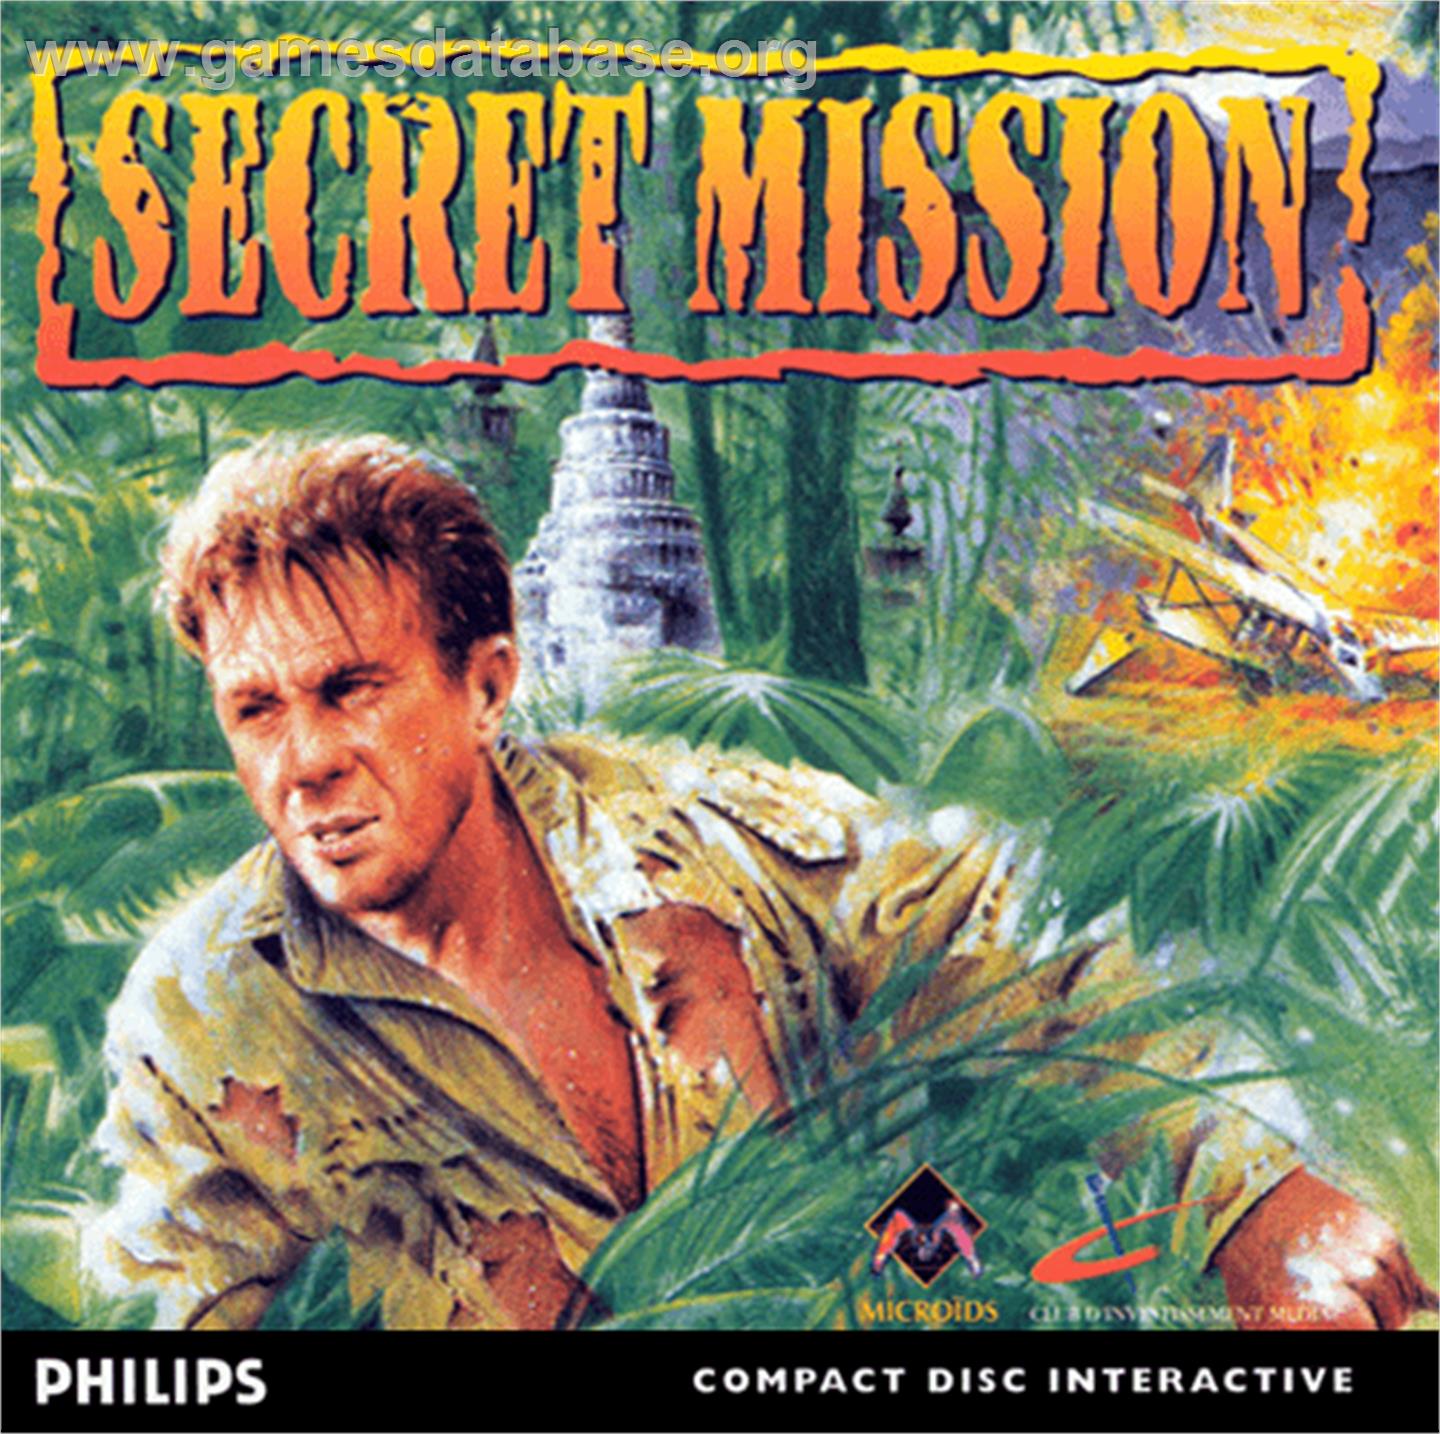 Secret Mission - Philips CD-i - Artwork - Box